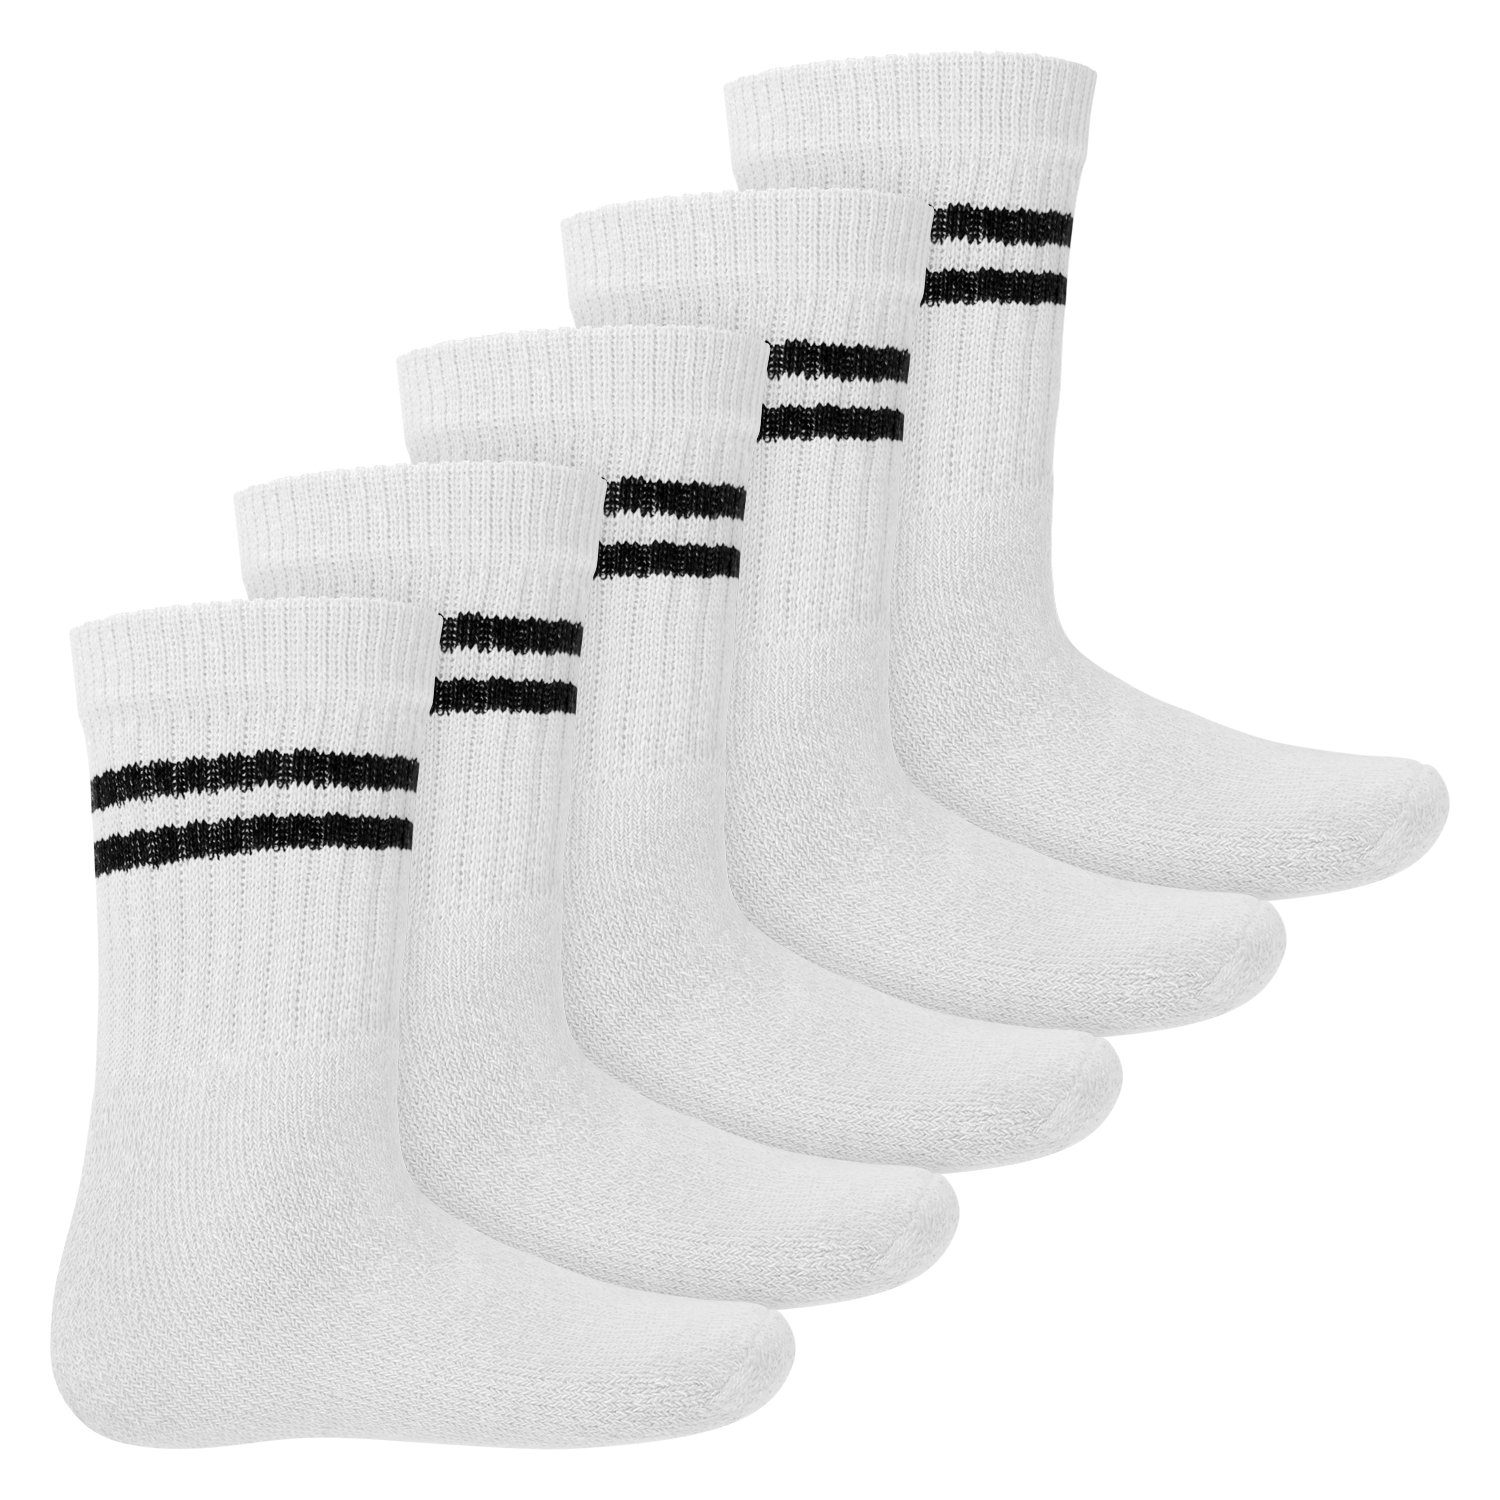 Tennissocken Freizeit (5/10 MT Tennissocken (5-Paar) Mädchen x Socken Kinder Jungen Weiß Paar) & 5